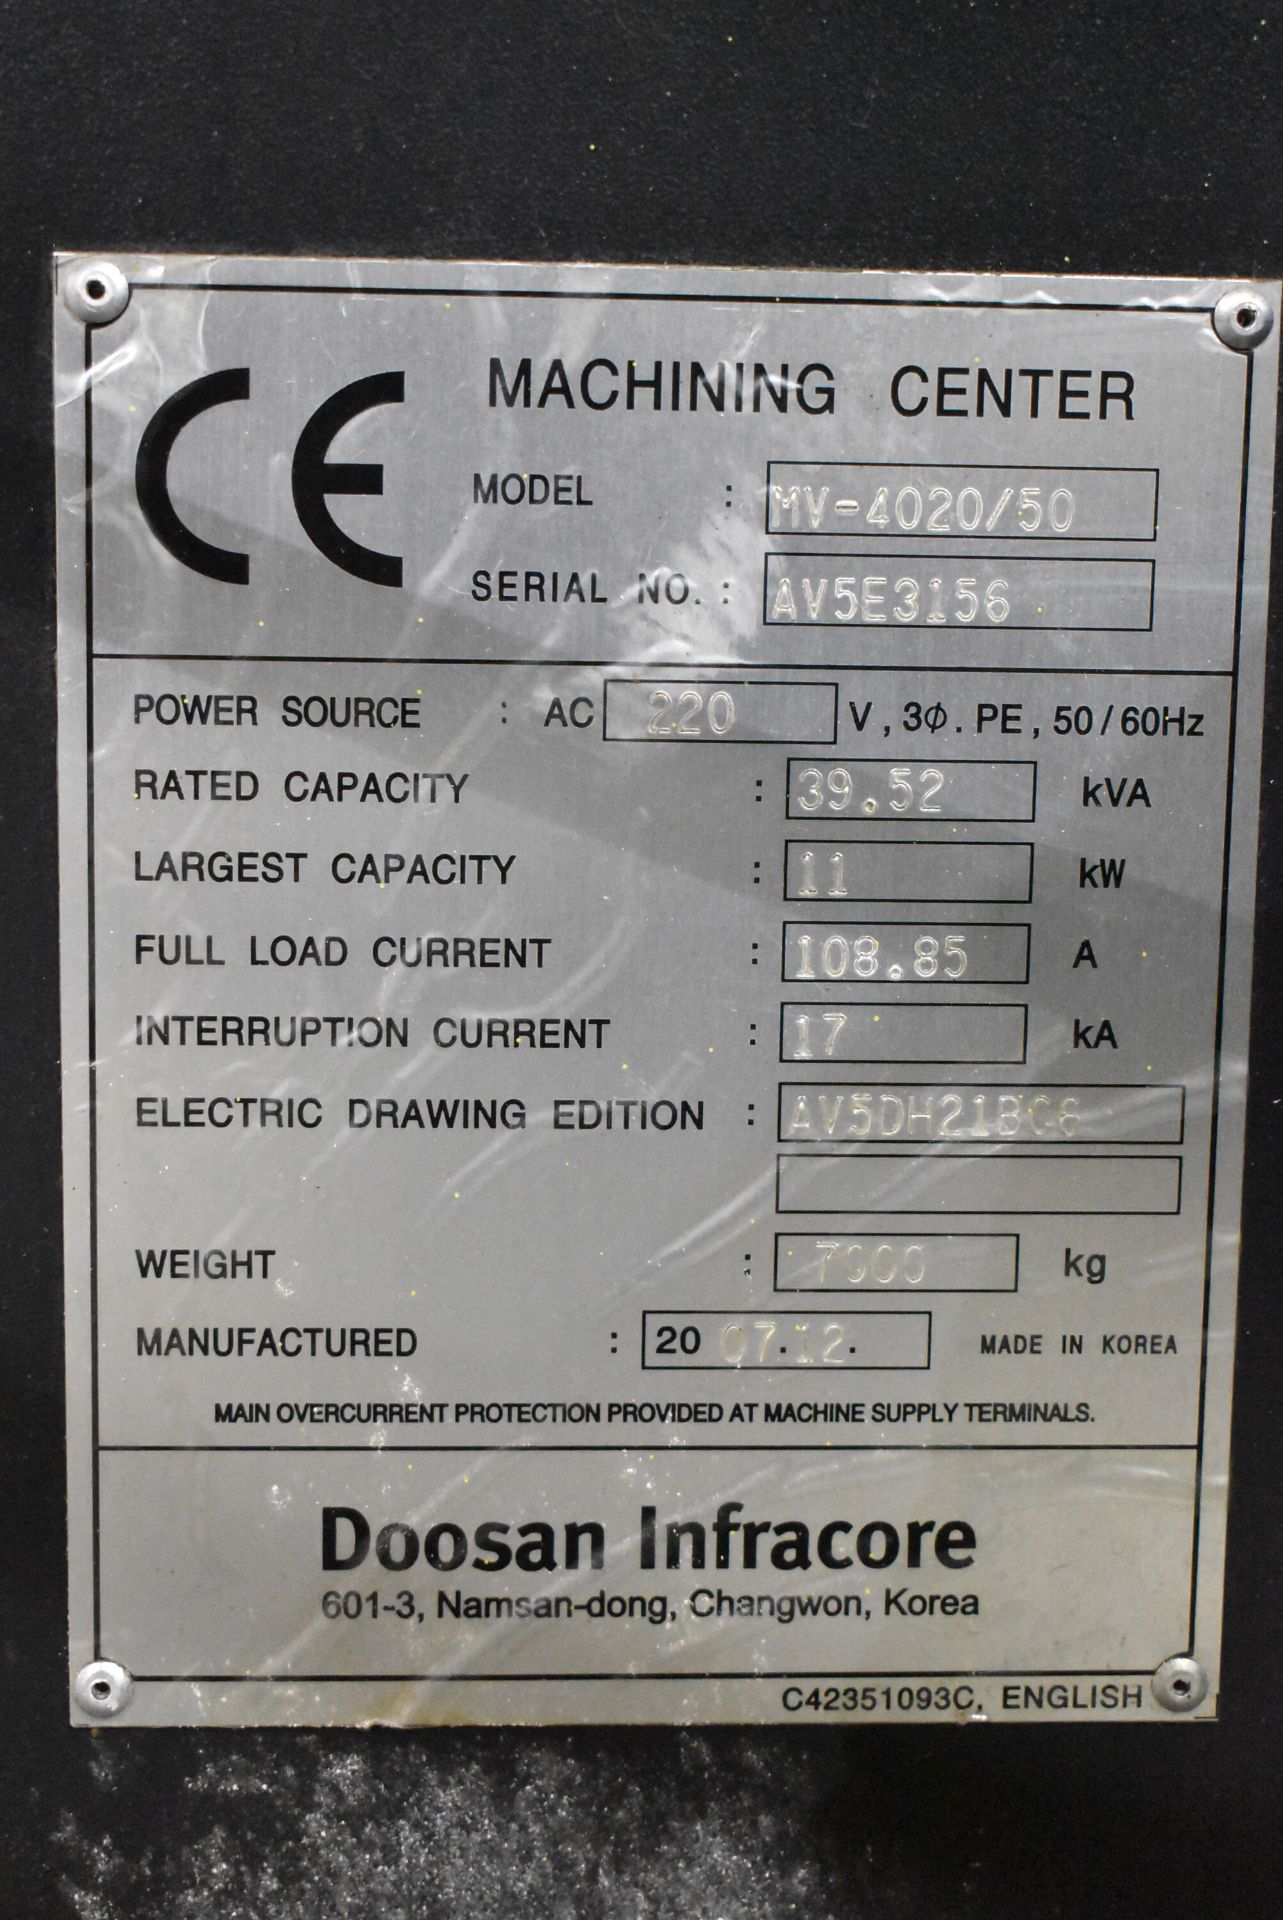 DOOSAN (2007) MV4020/50 CNC VERTICAL MACHINING CENTER WITH FANUC SERIES 2TI-MB CNC CONTROL, 47" - Image 13 of 13